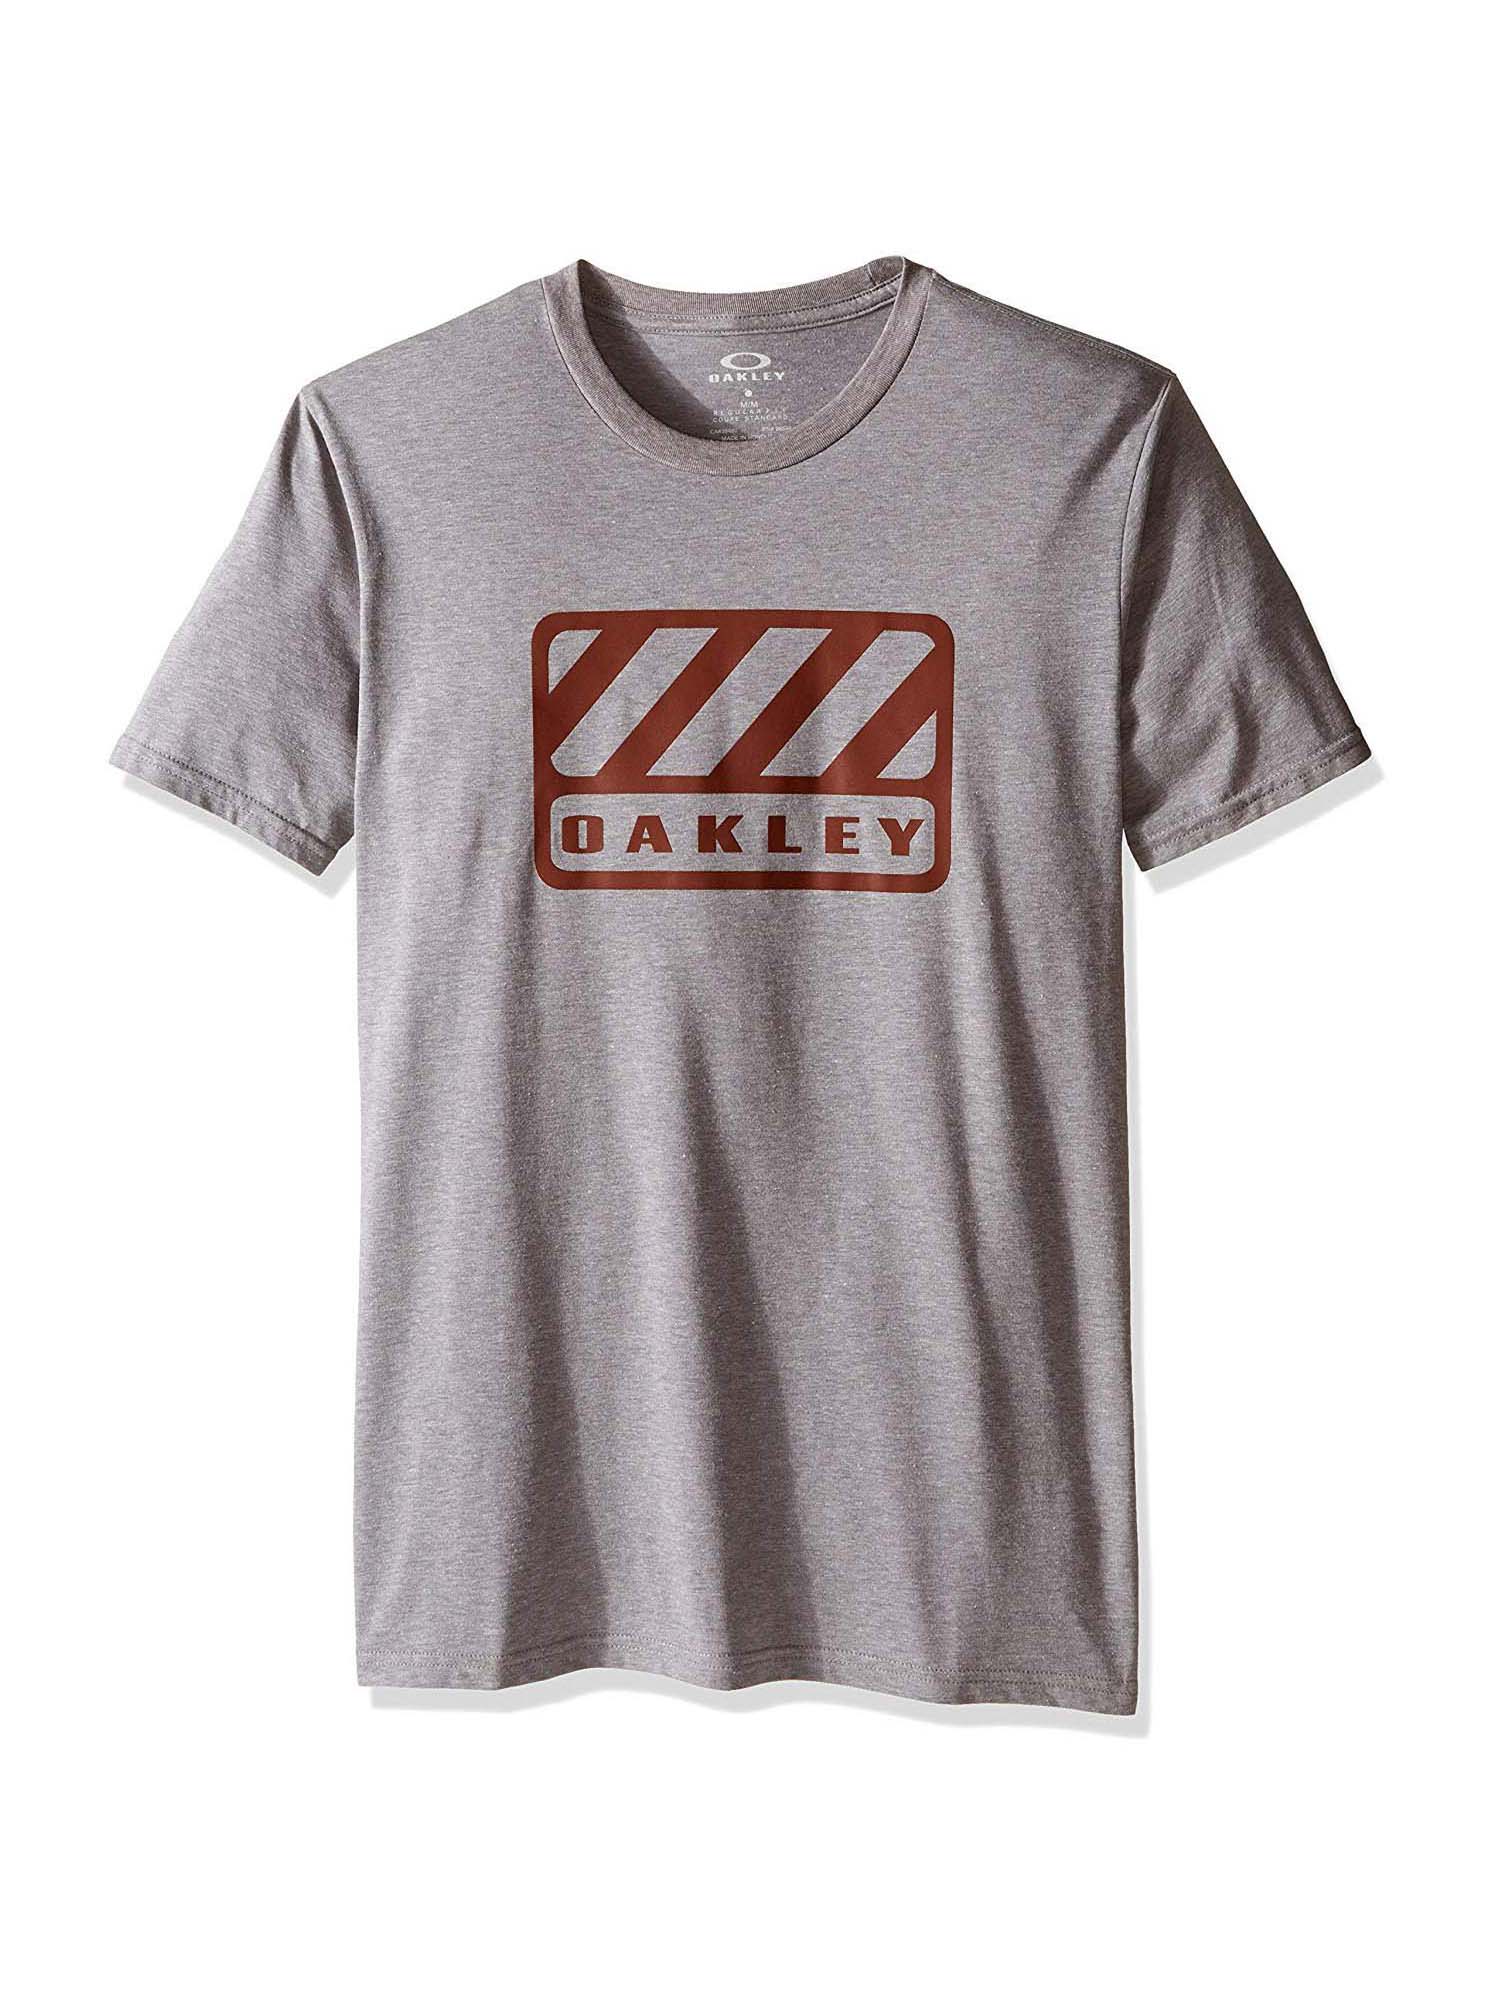 Oakley 50/50 Badge Men's T-Shirt - Athletic Heather Grey - image 1 of 1